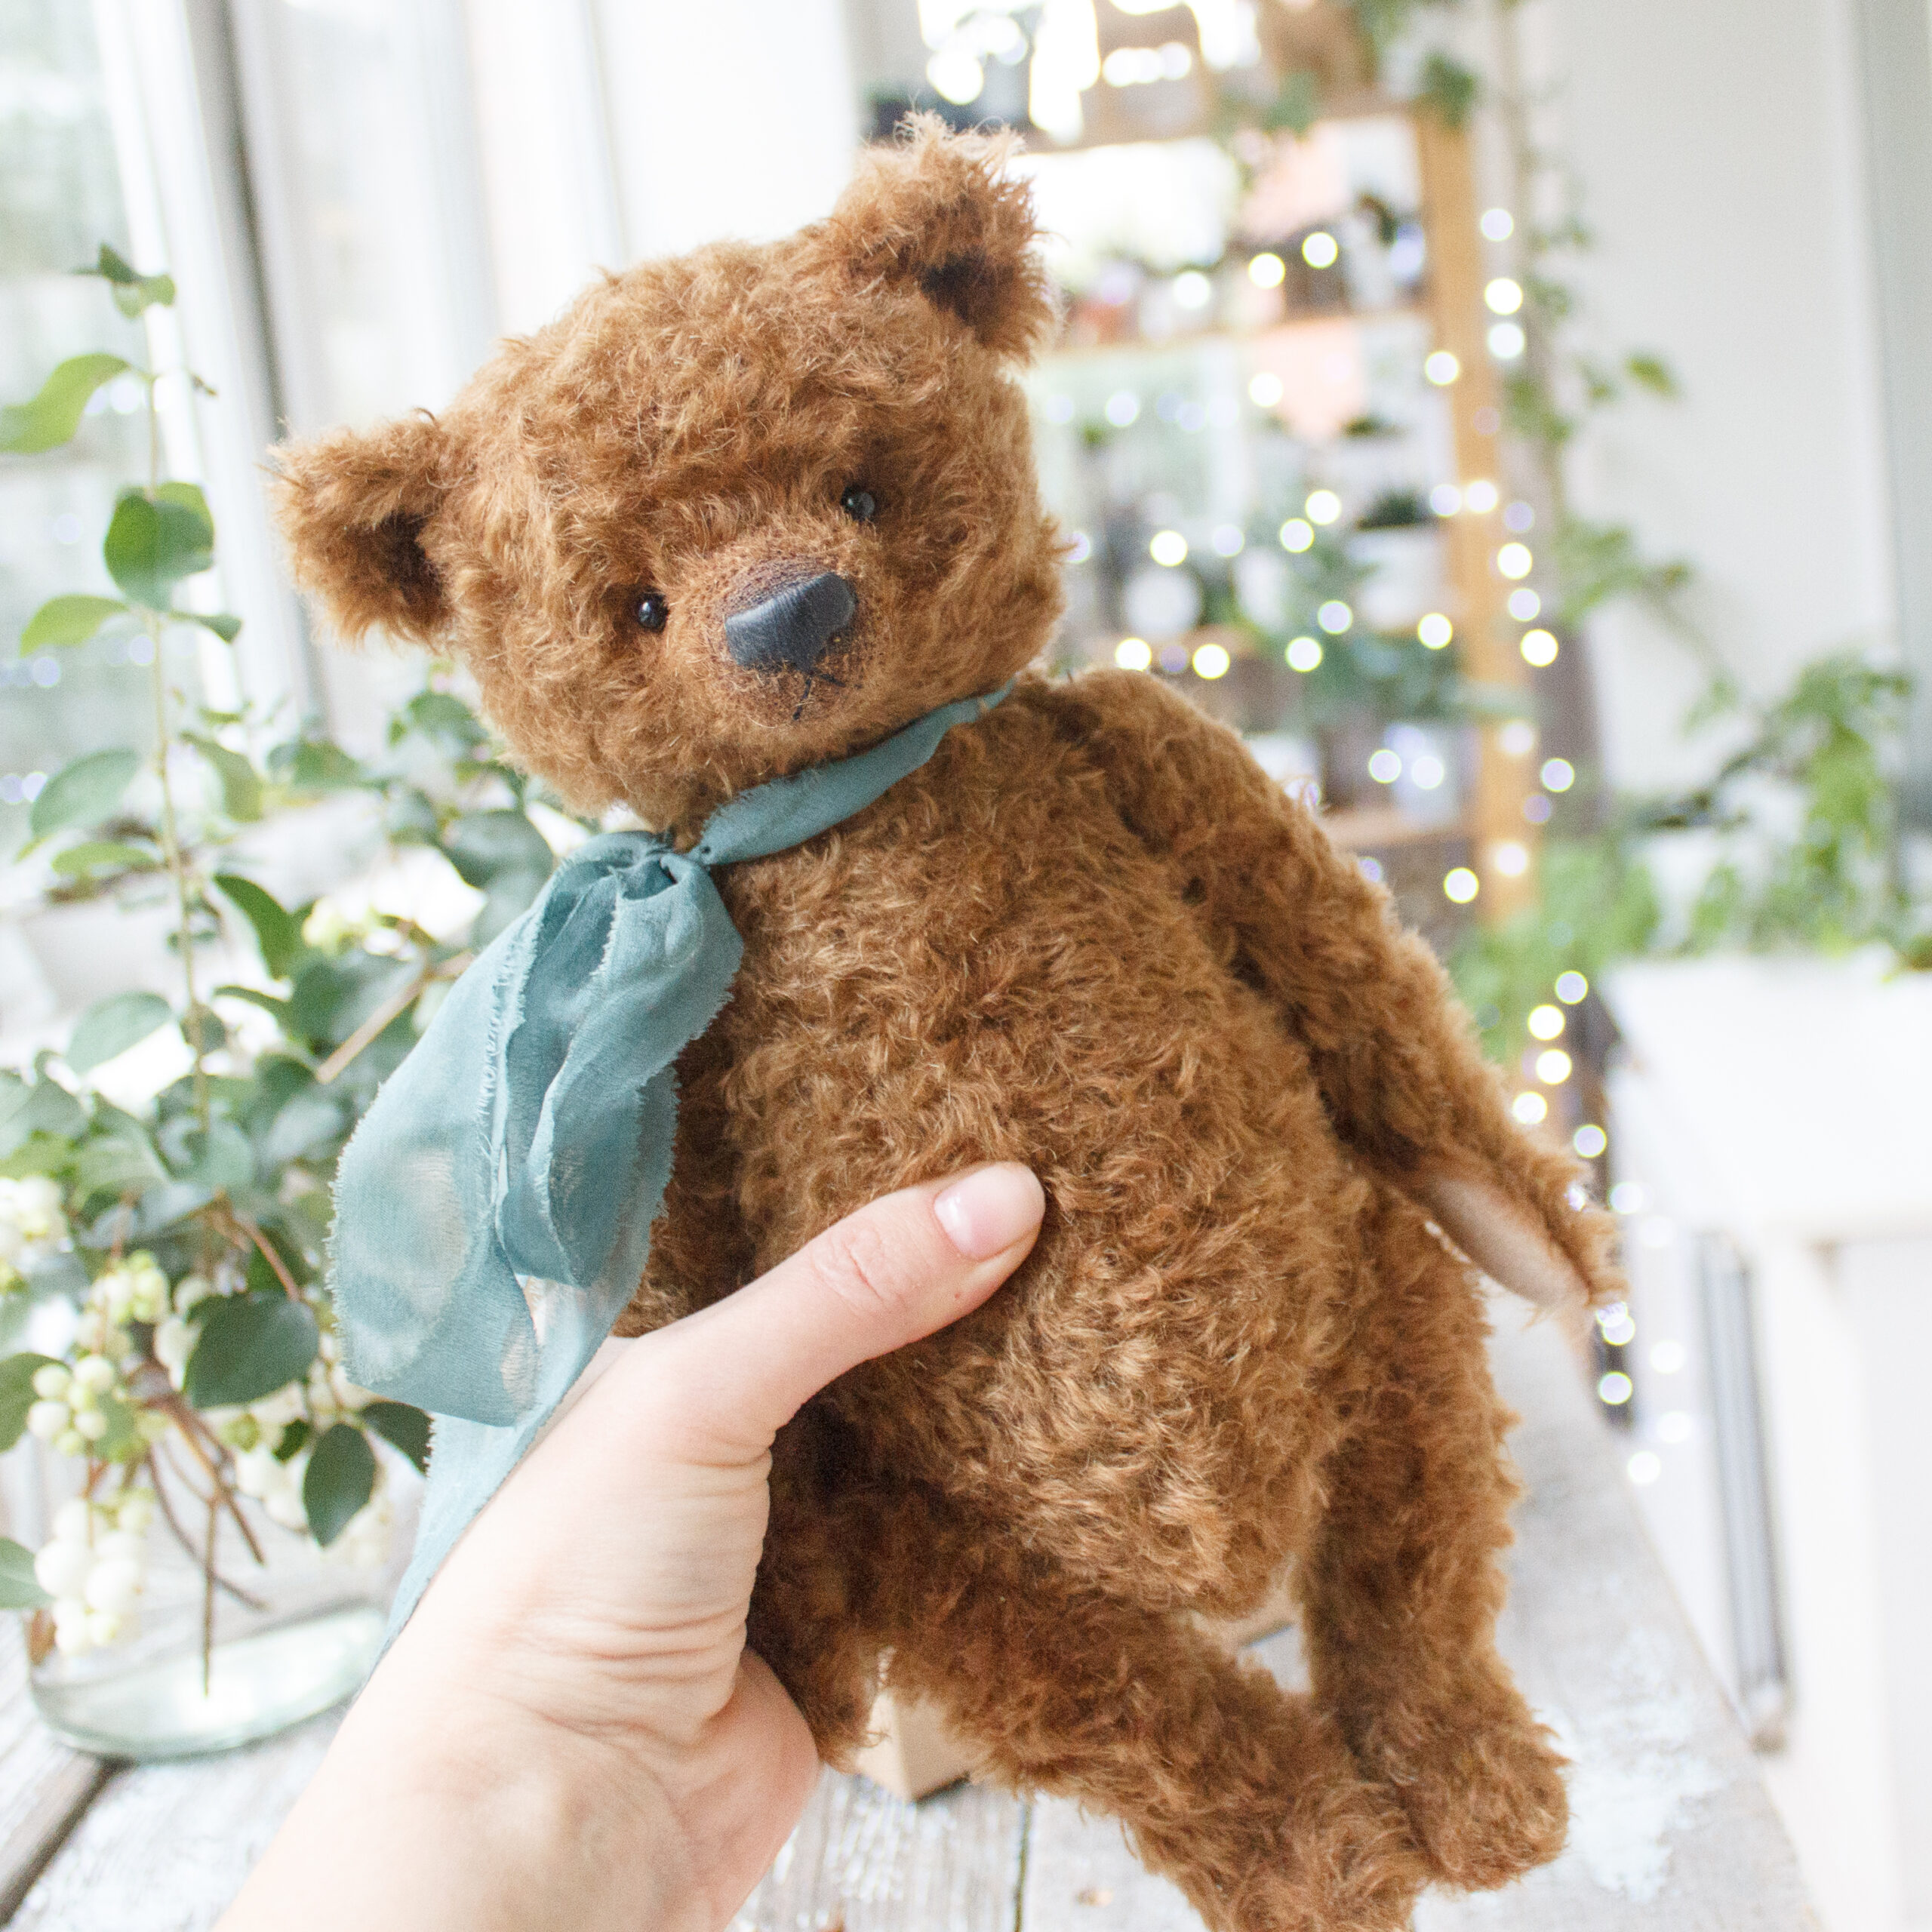 Classic Vintage Teddy Bear Pattern For Sewing Teddy Bear Sew